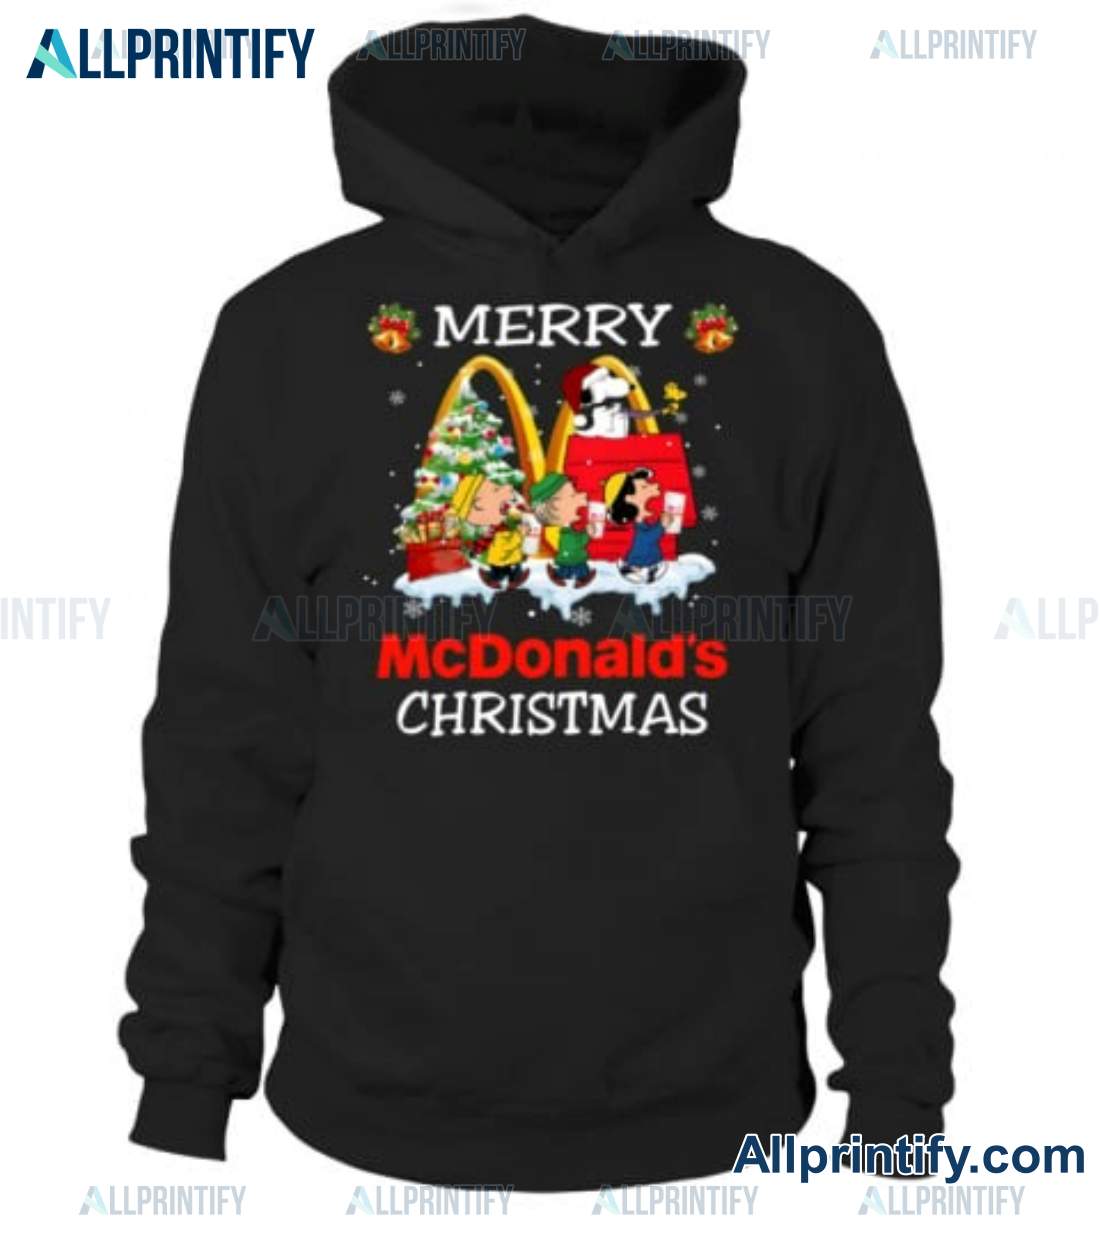 The Peanuts Merry Mcdonald's Christmas Shirt a